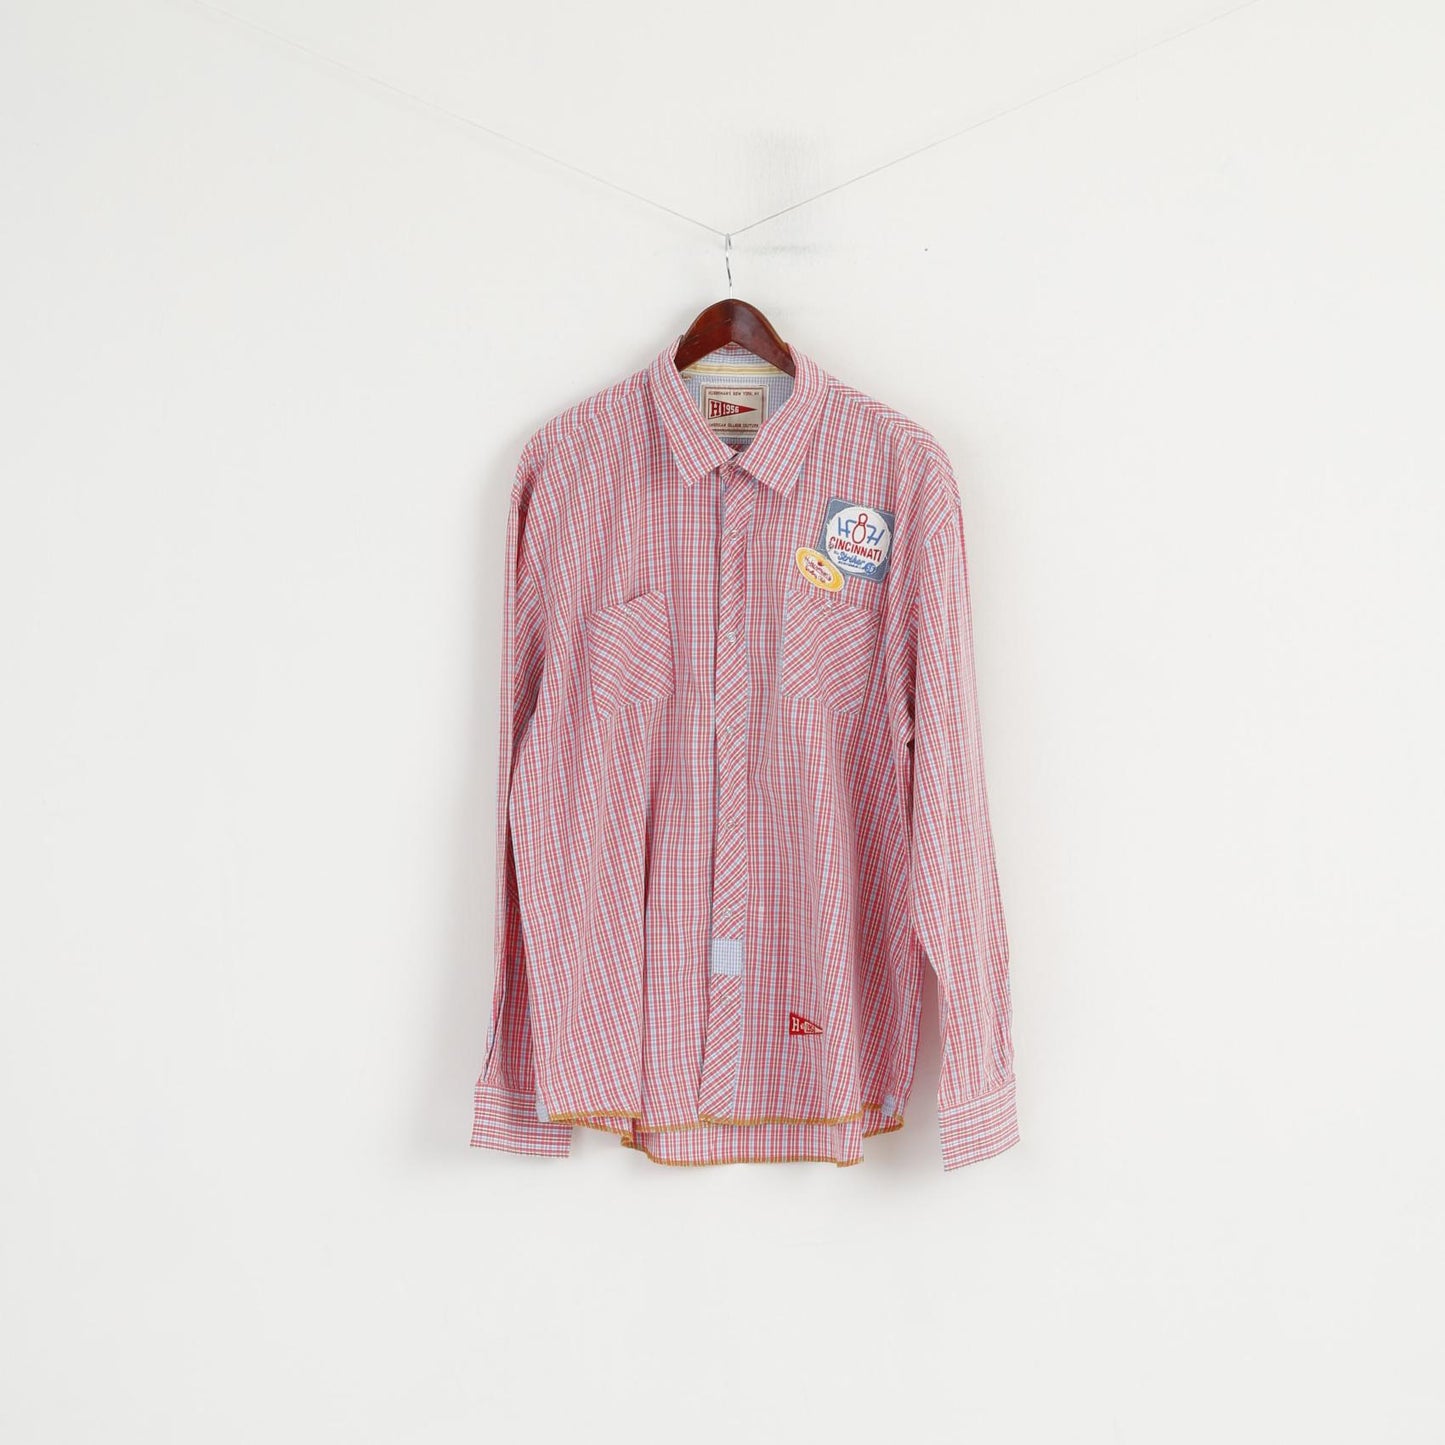 Huberman's Men XXXL Casual Shirt Pink Check College Couture Long Sleeve Top